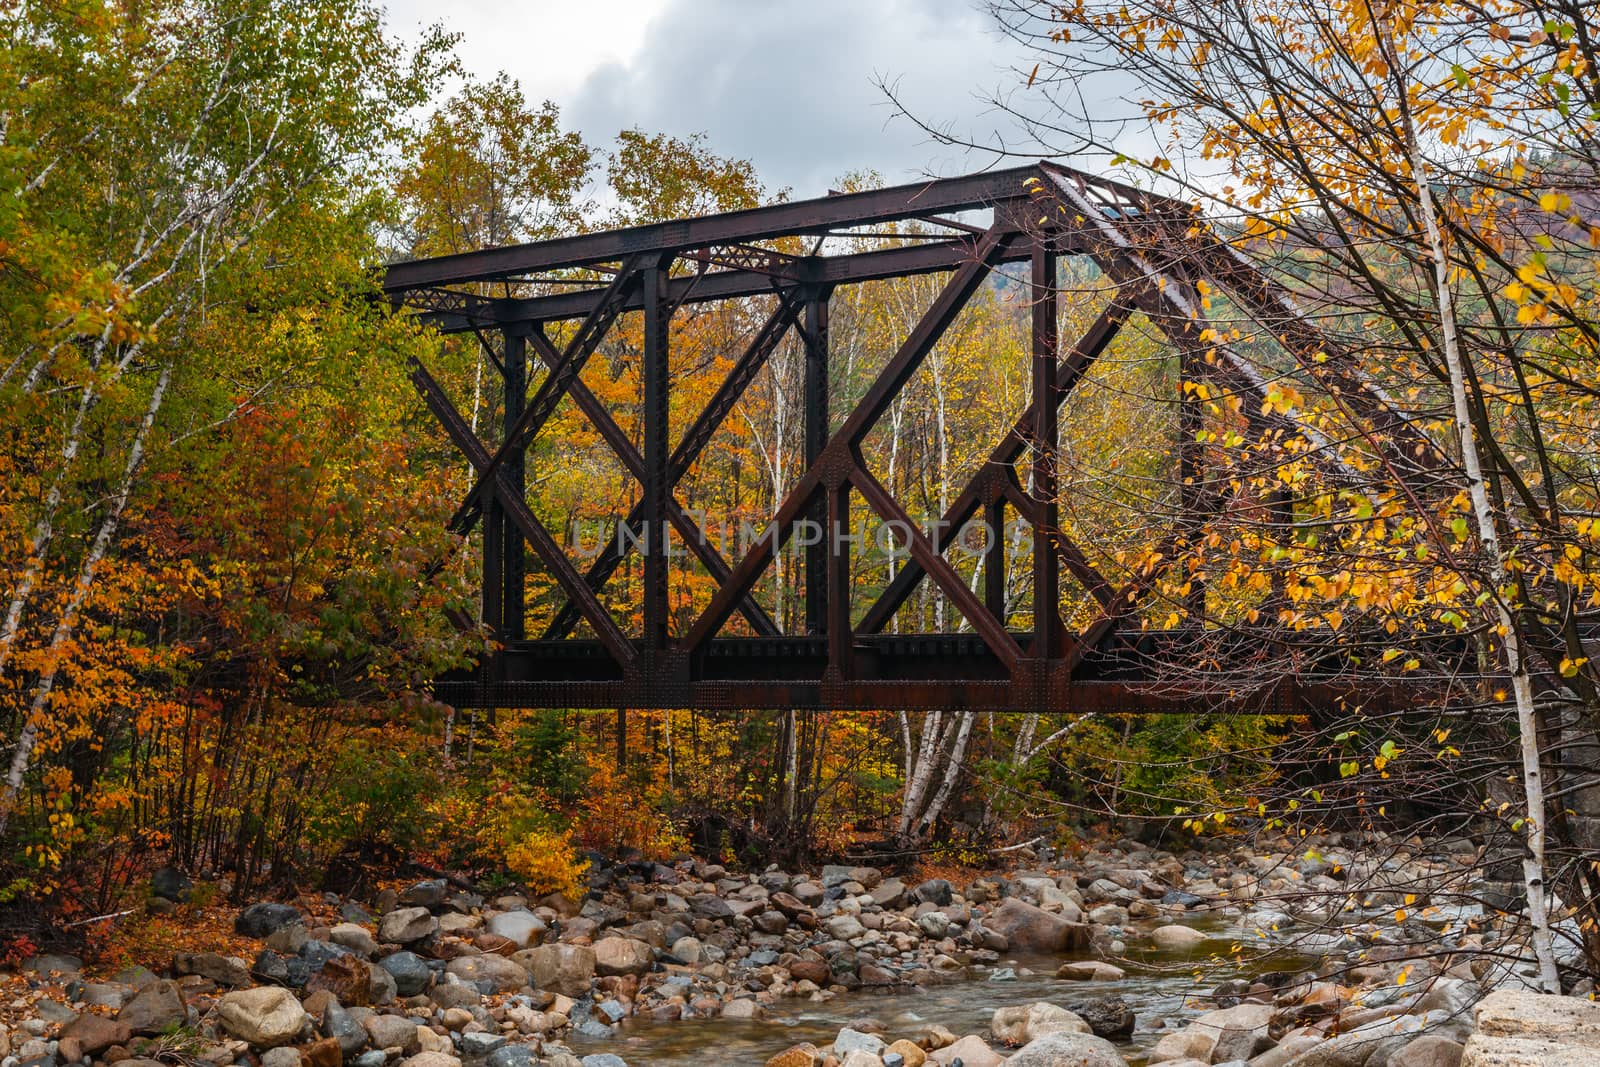 Steel truss railway bridge across Sawyer River at Bears Notch on by brians101